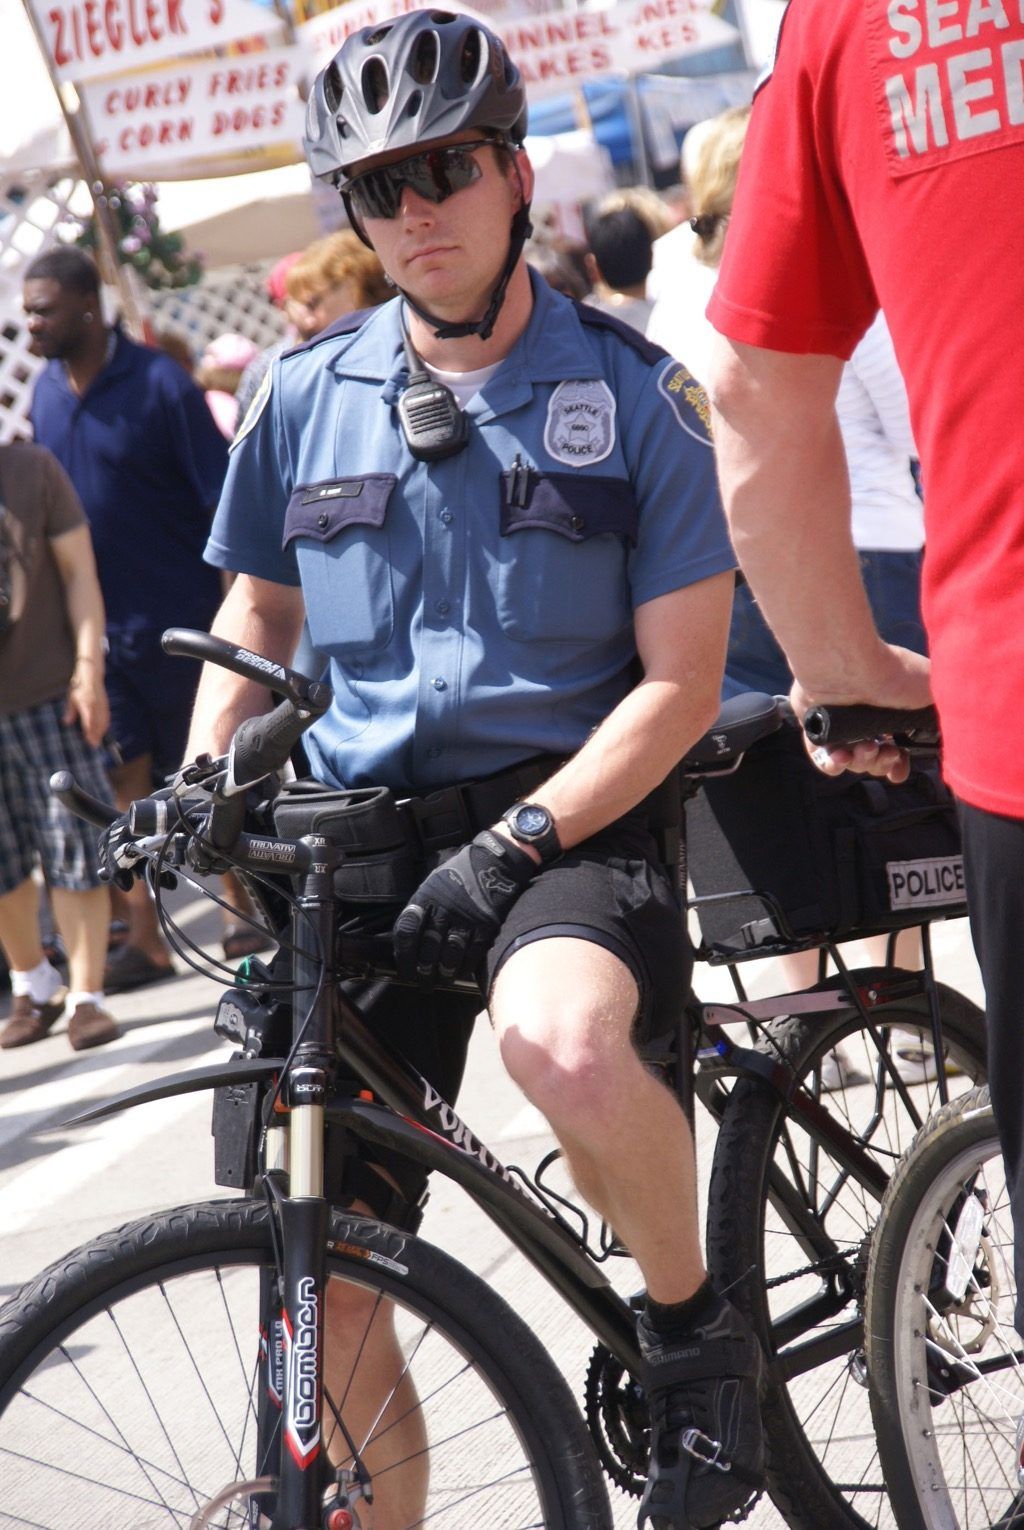 Policial de bicicleta